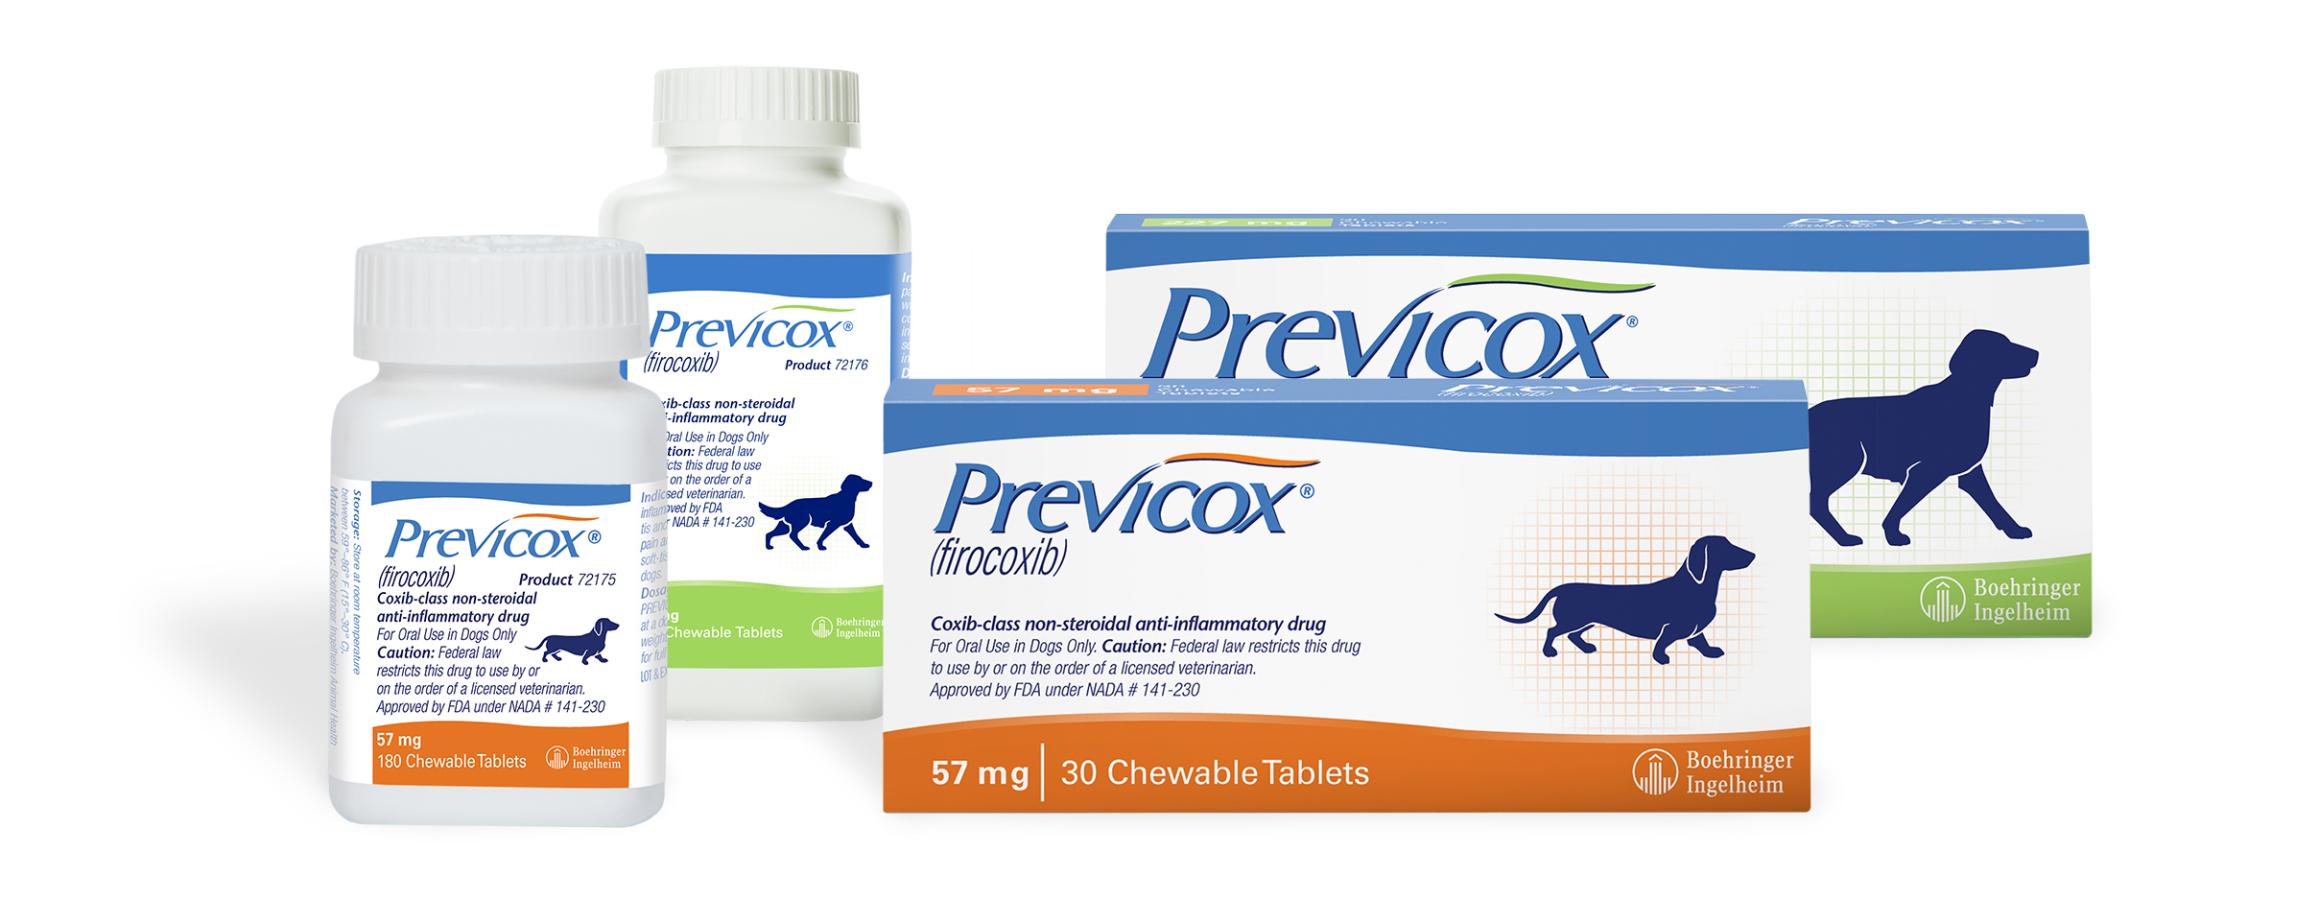 PREVICOX® (firocoxib) for Osteoarthritis in Dogs